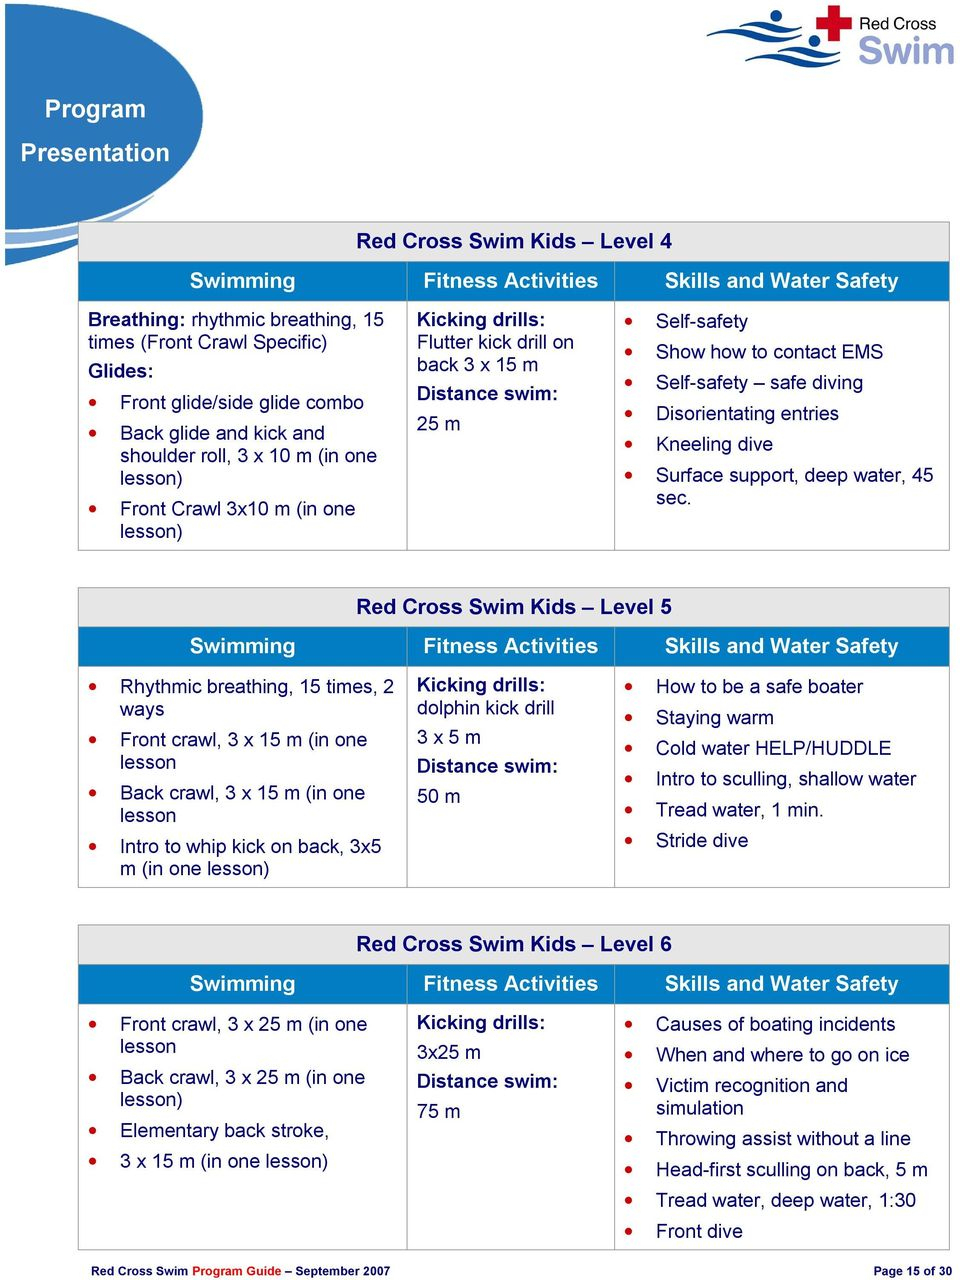 Red Cross Swim Program Guide - Pdf Free Download